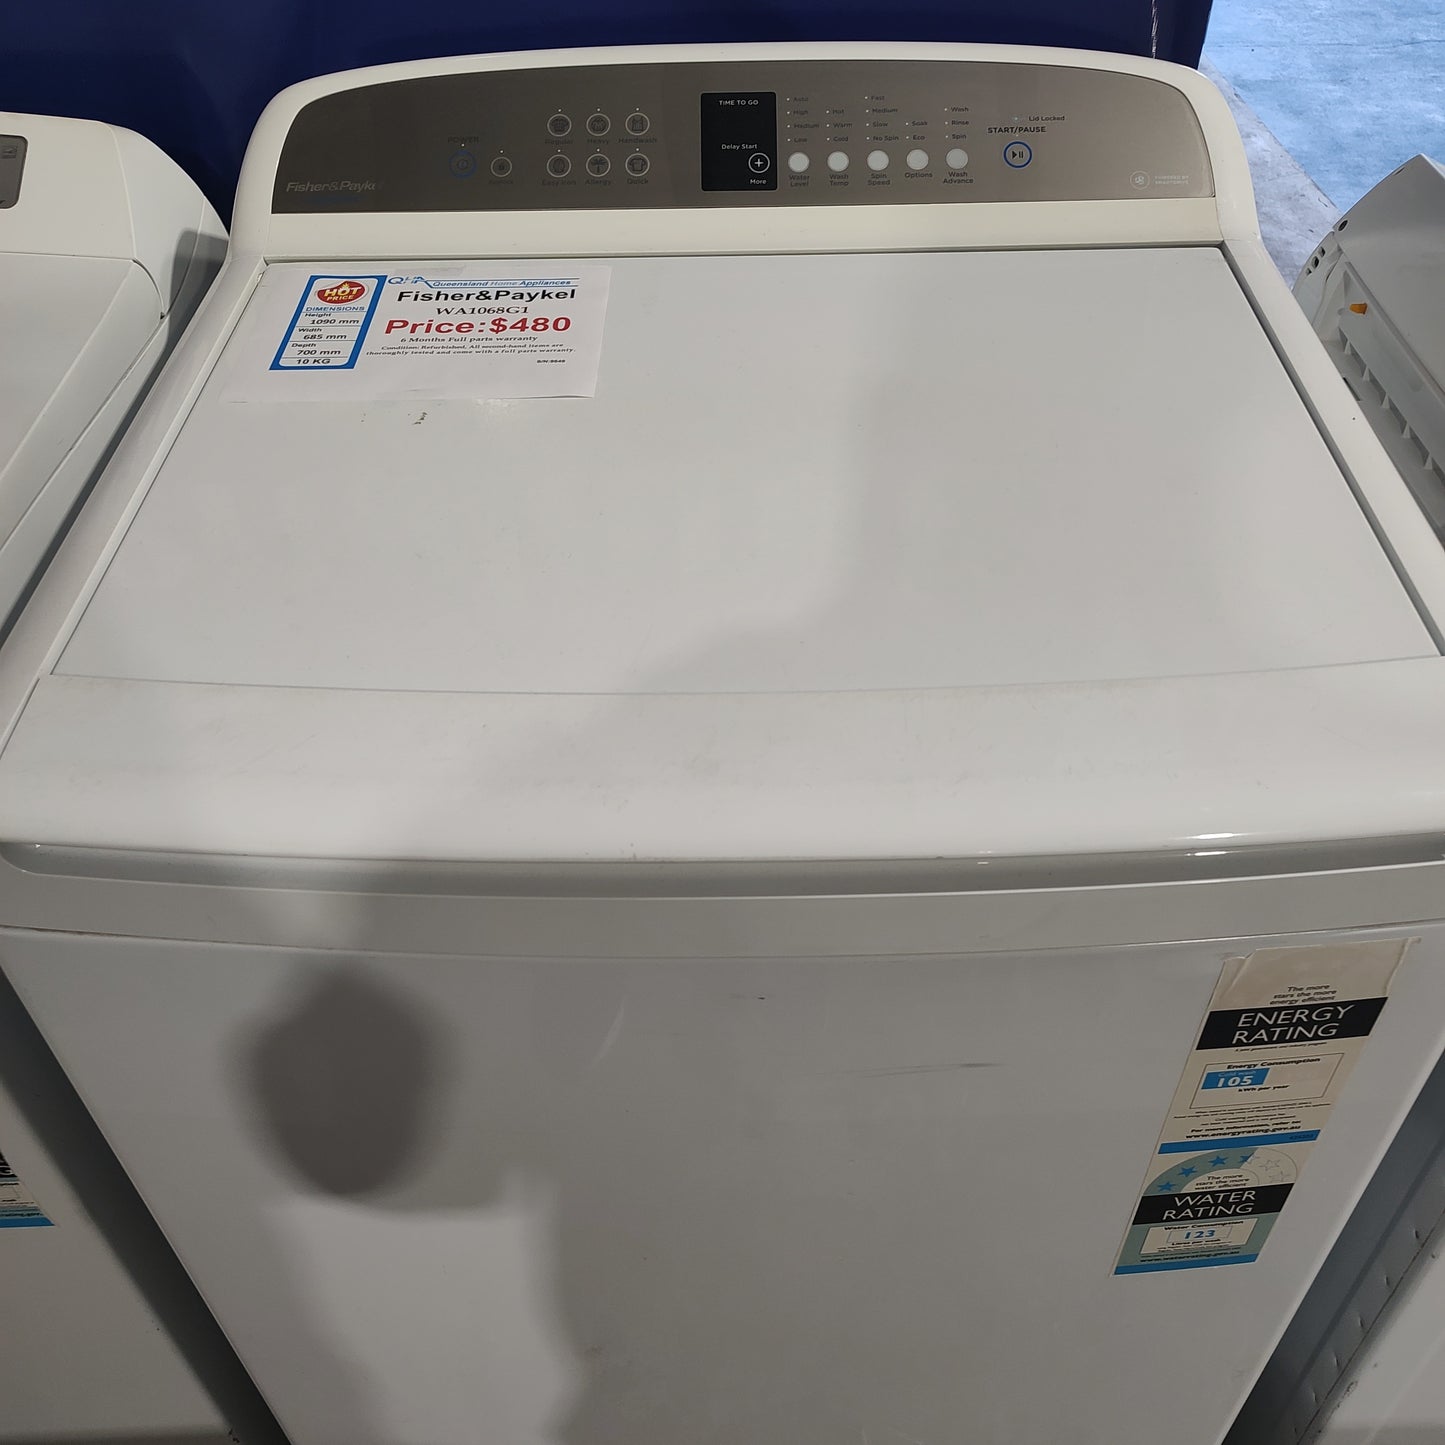 Fisher & Paykel WA1068G1 10kg WashSmart Top Load Washing Machine